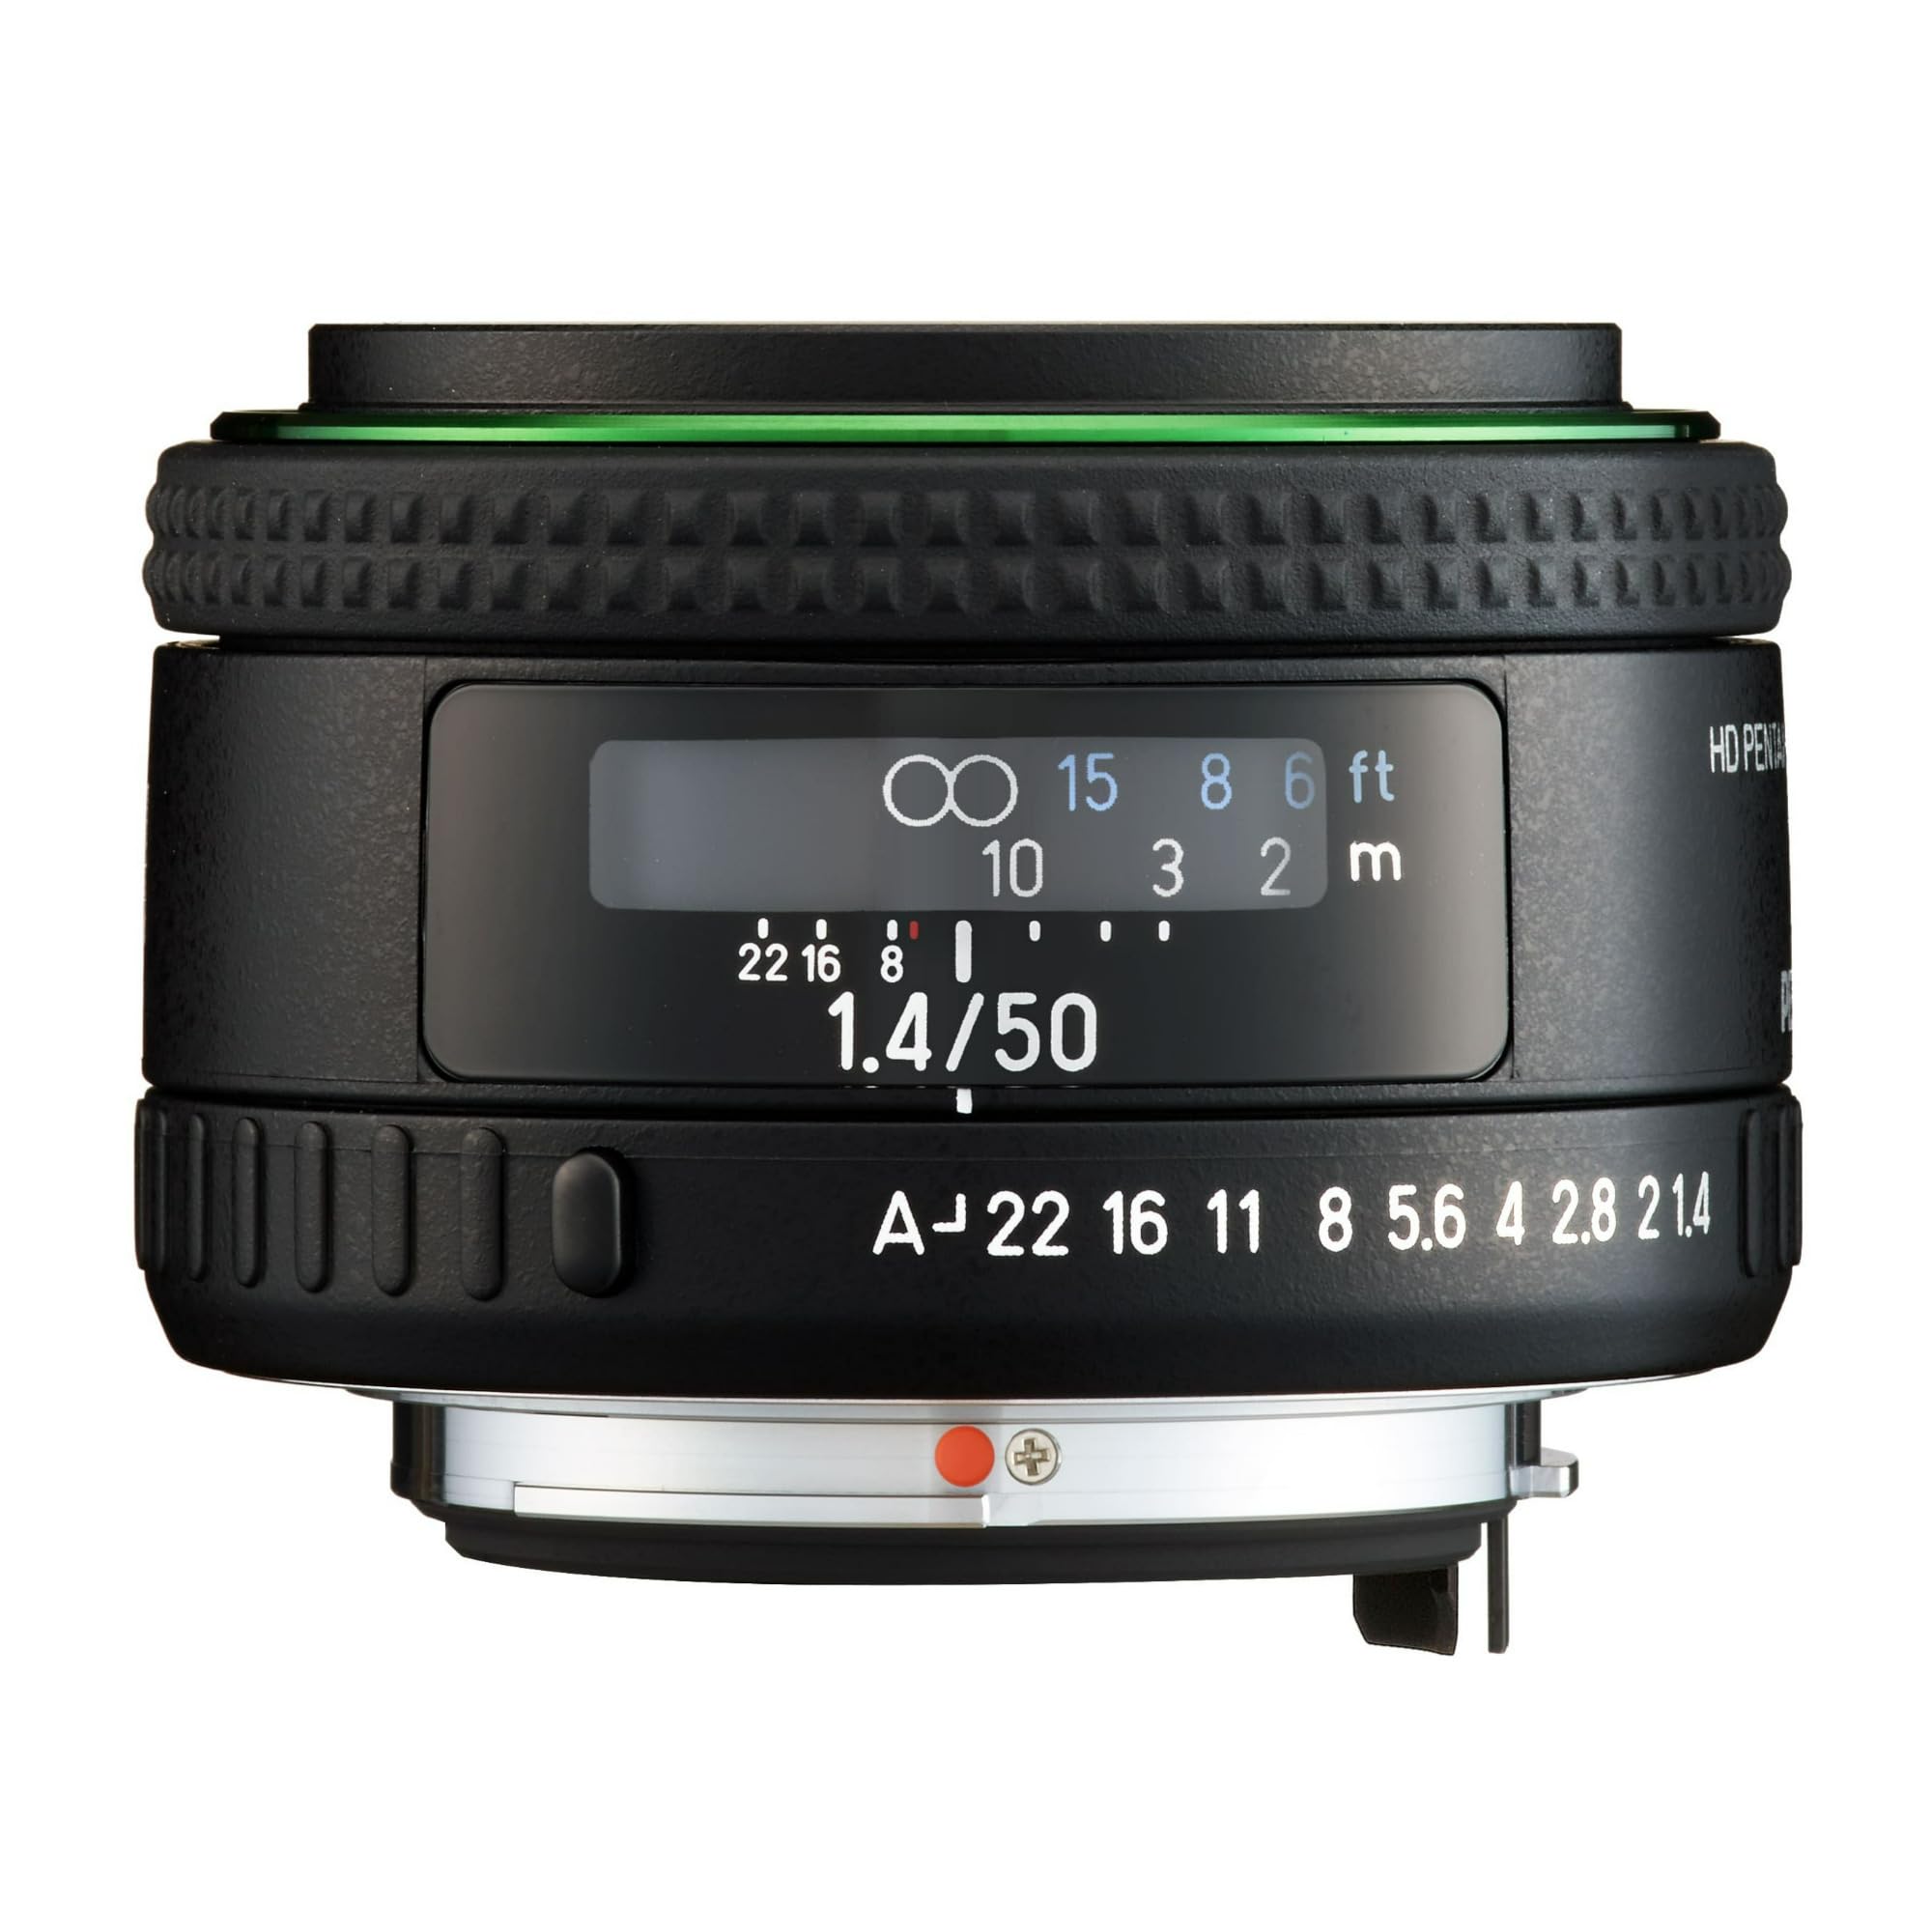 Pentax HD PENTAX-FA 50mmF1.4, Single-Focus, Standard Lens for use with K-Mount Digital SLR Cameras